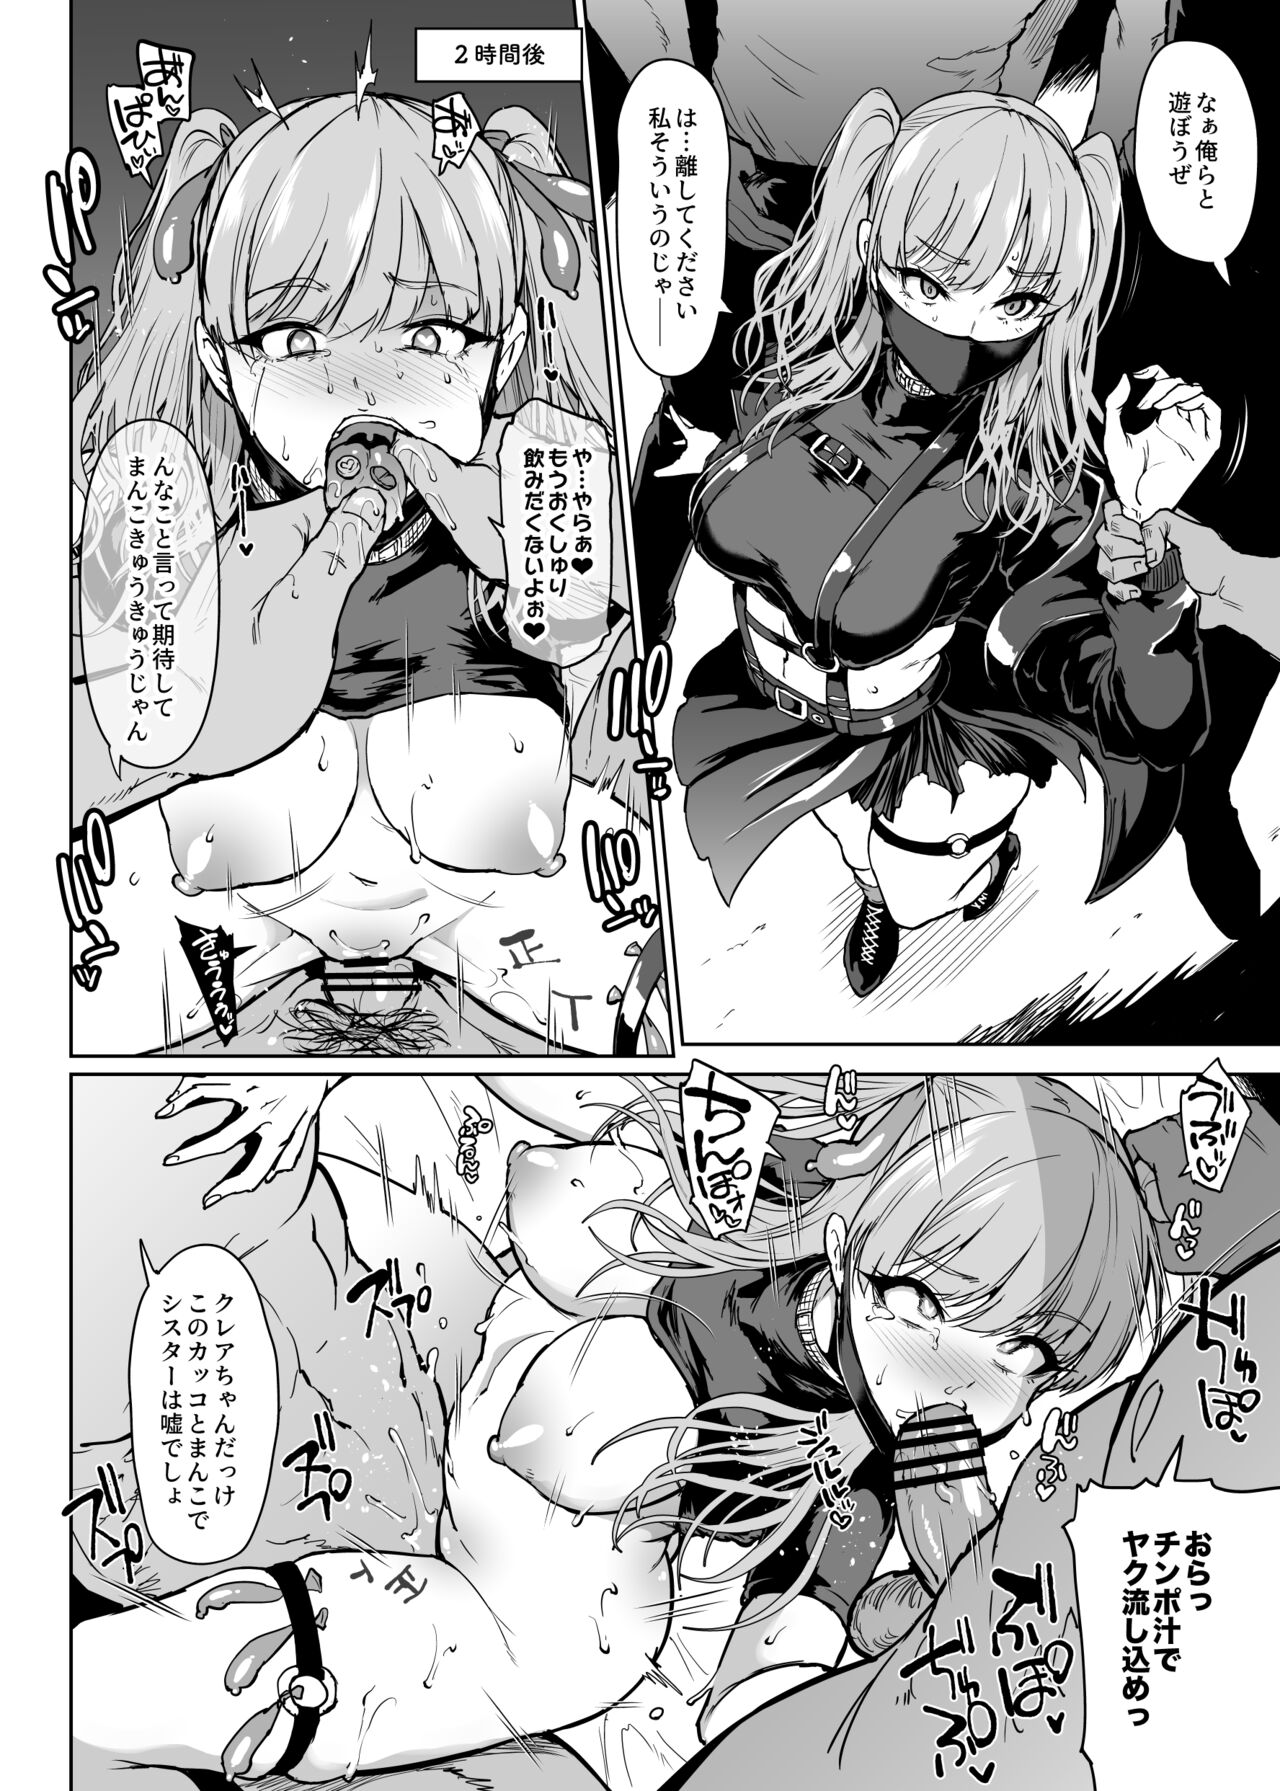 Gangbang Doujinshi - Vtuber Kisek Gangbang & Goblin Rape Manga & V-river insult manga - Page 6 -  HentaiEra